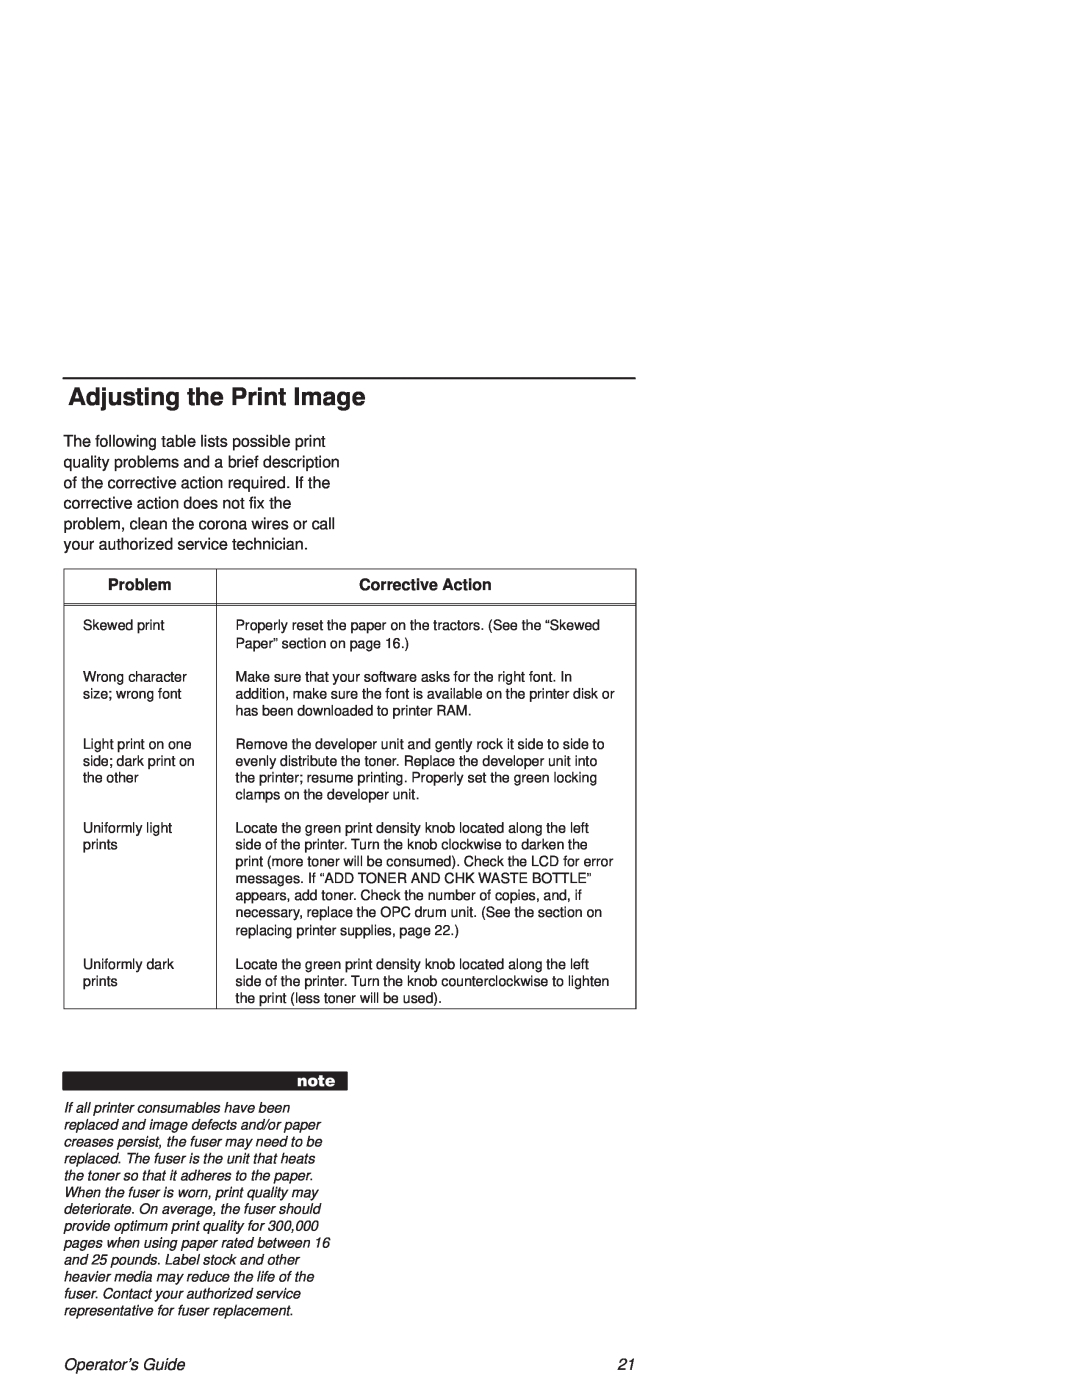 Printronix L1524 manual Adjutig the Prit Iage, Problem, Corrective Action, Operators Guide 